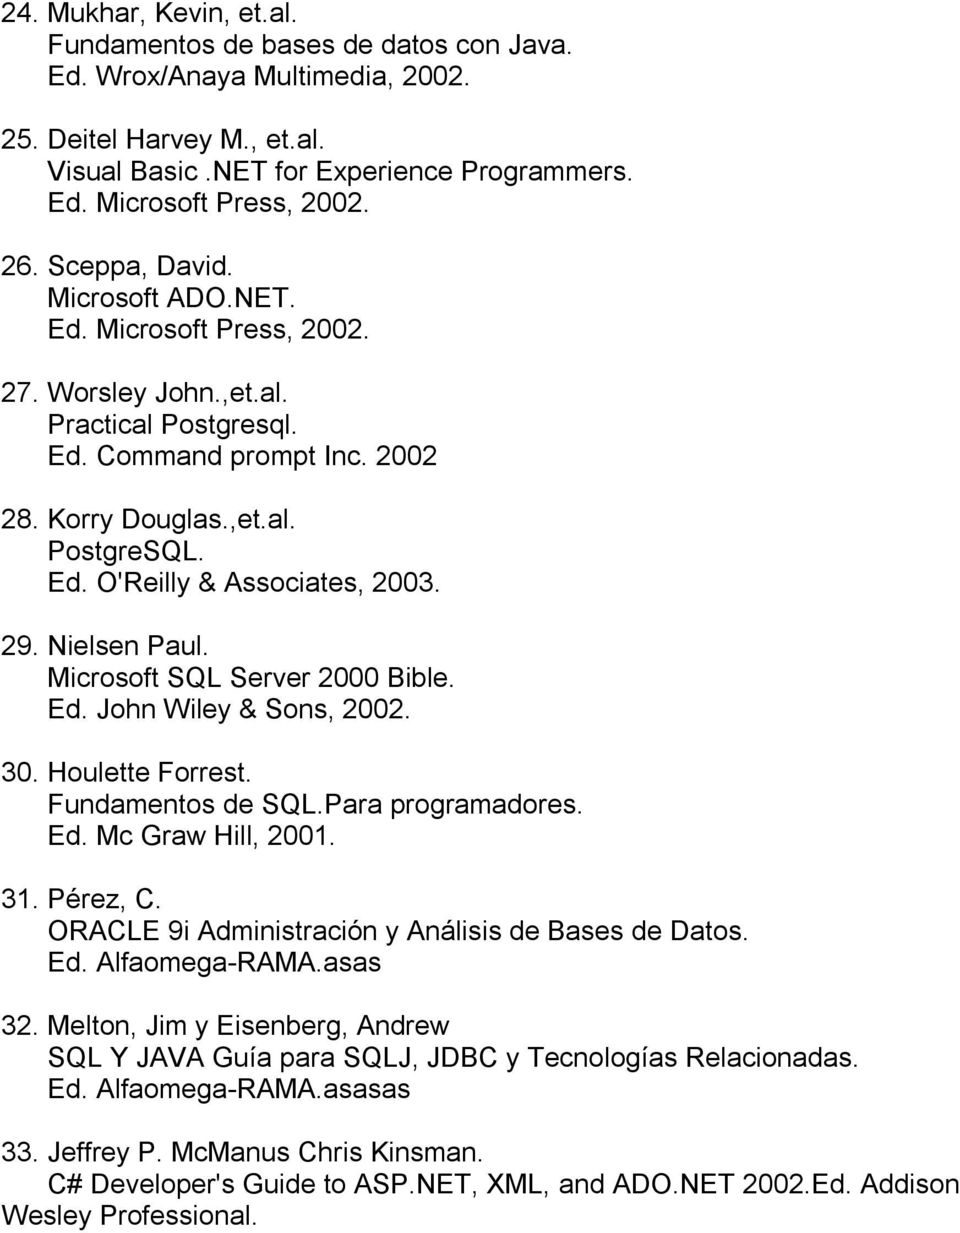 29. Nielsen Paul. Microsoft SQL Server 2000 Bible. Ed. John Wiley & Sons, 2002. 30. Houlette Forrest. Fundamentos de SQL.Para programadores. Ed. Mc Graw Hill, 2001. 31. Pérez, C.